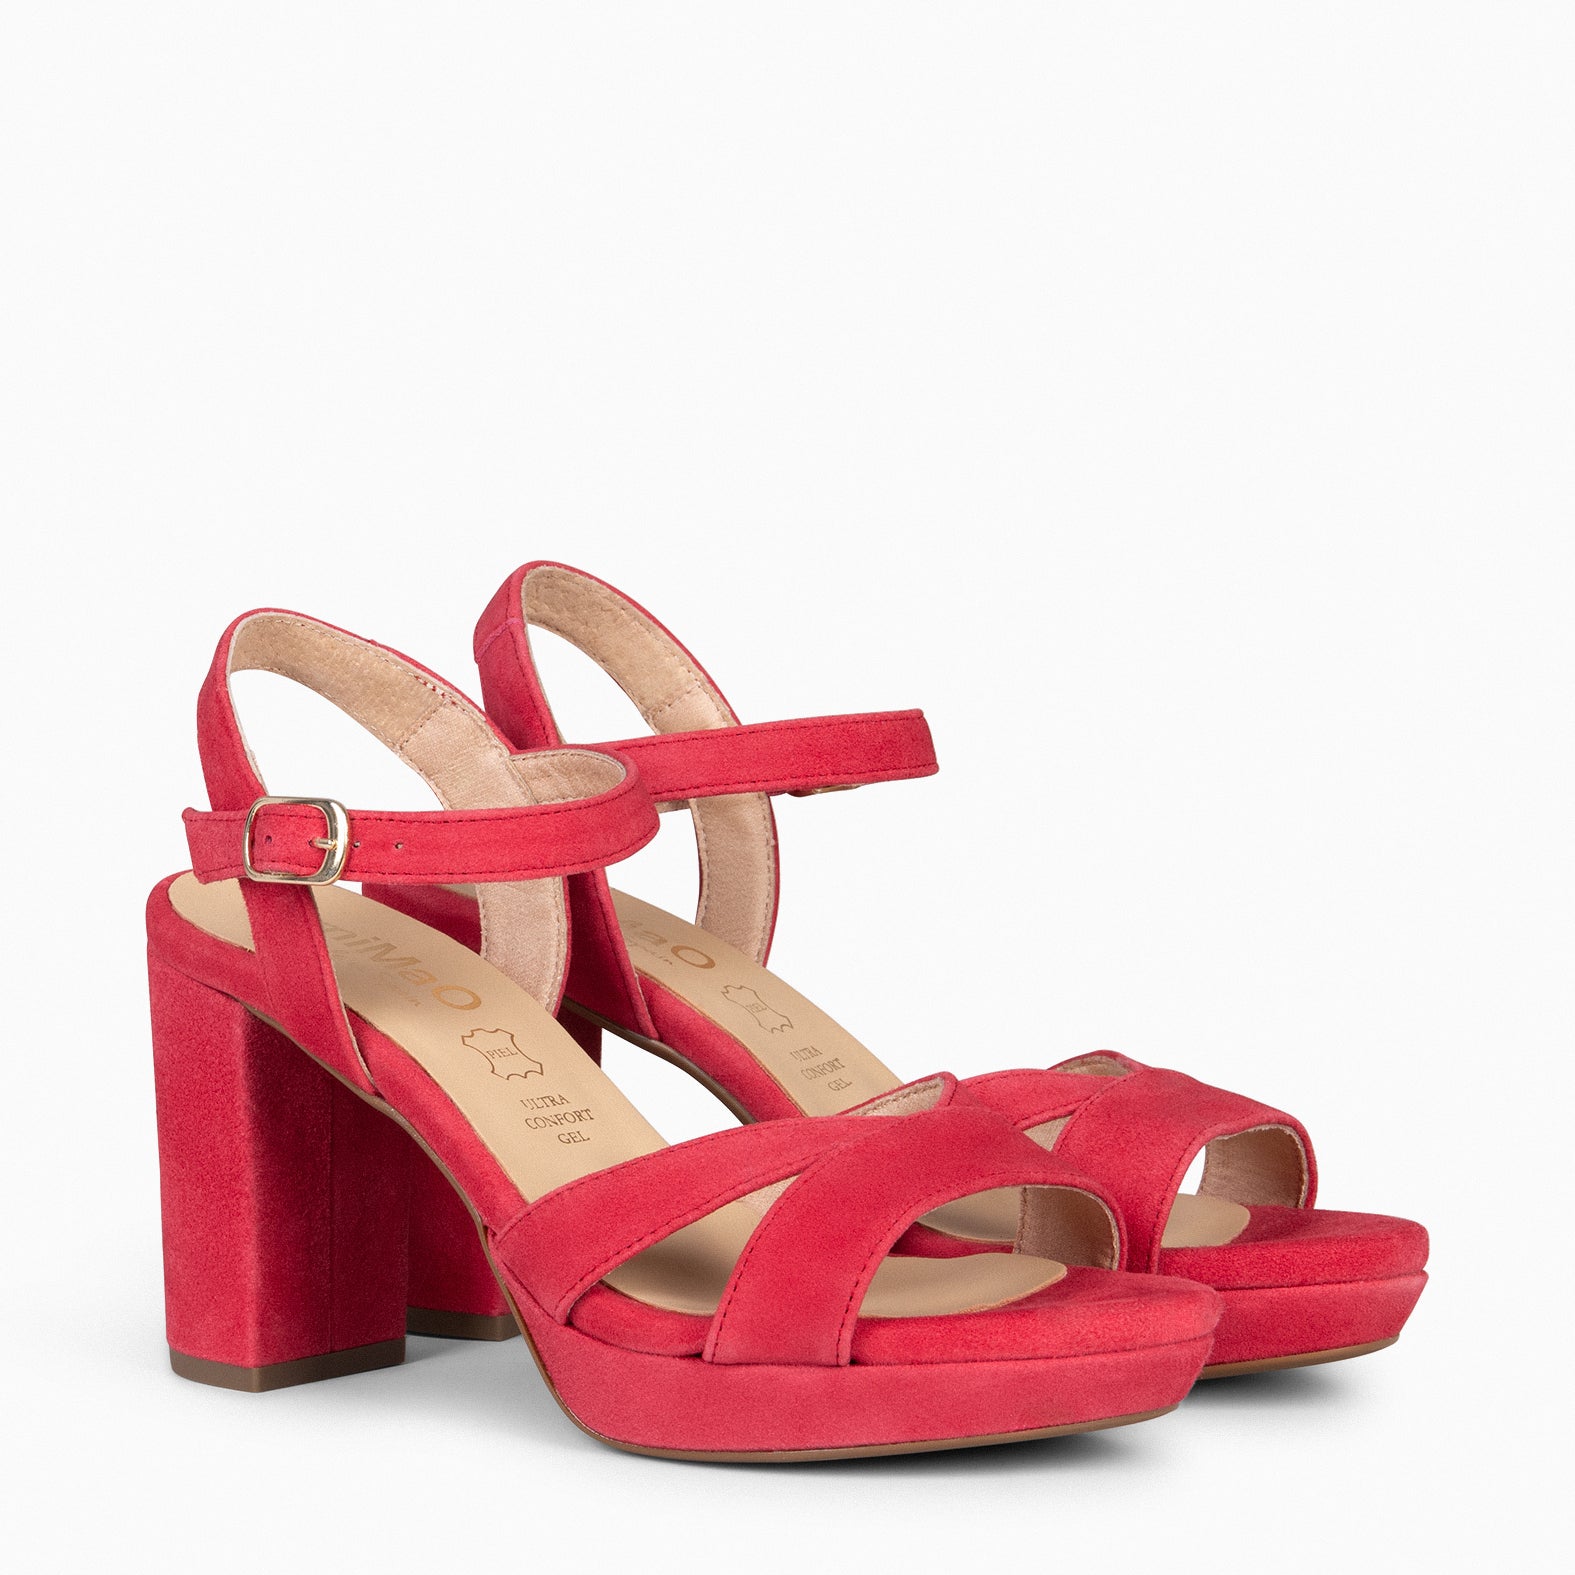 PARIS – RED high heel sandal with platform